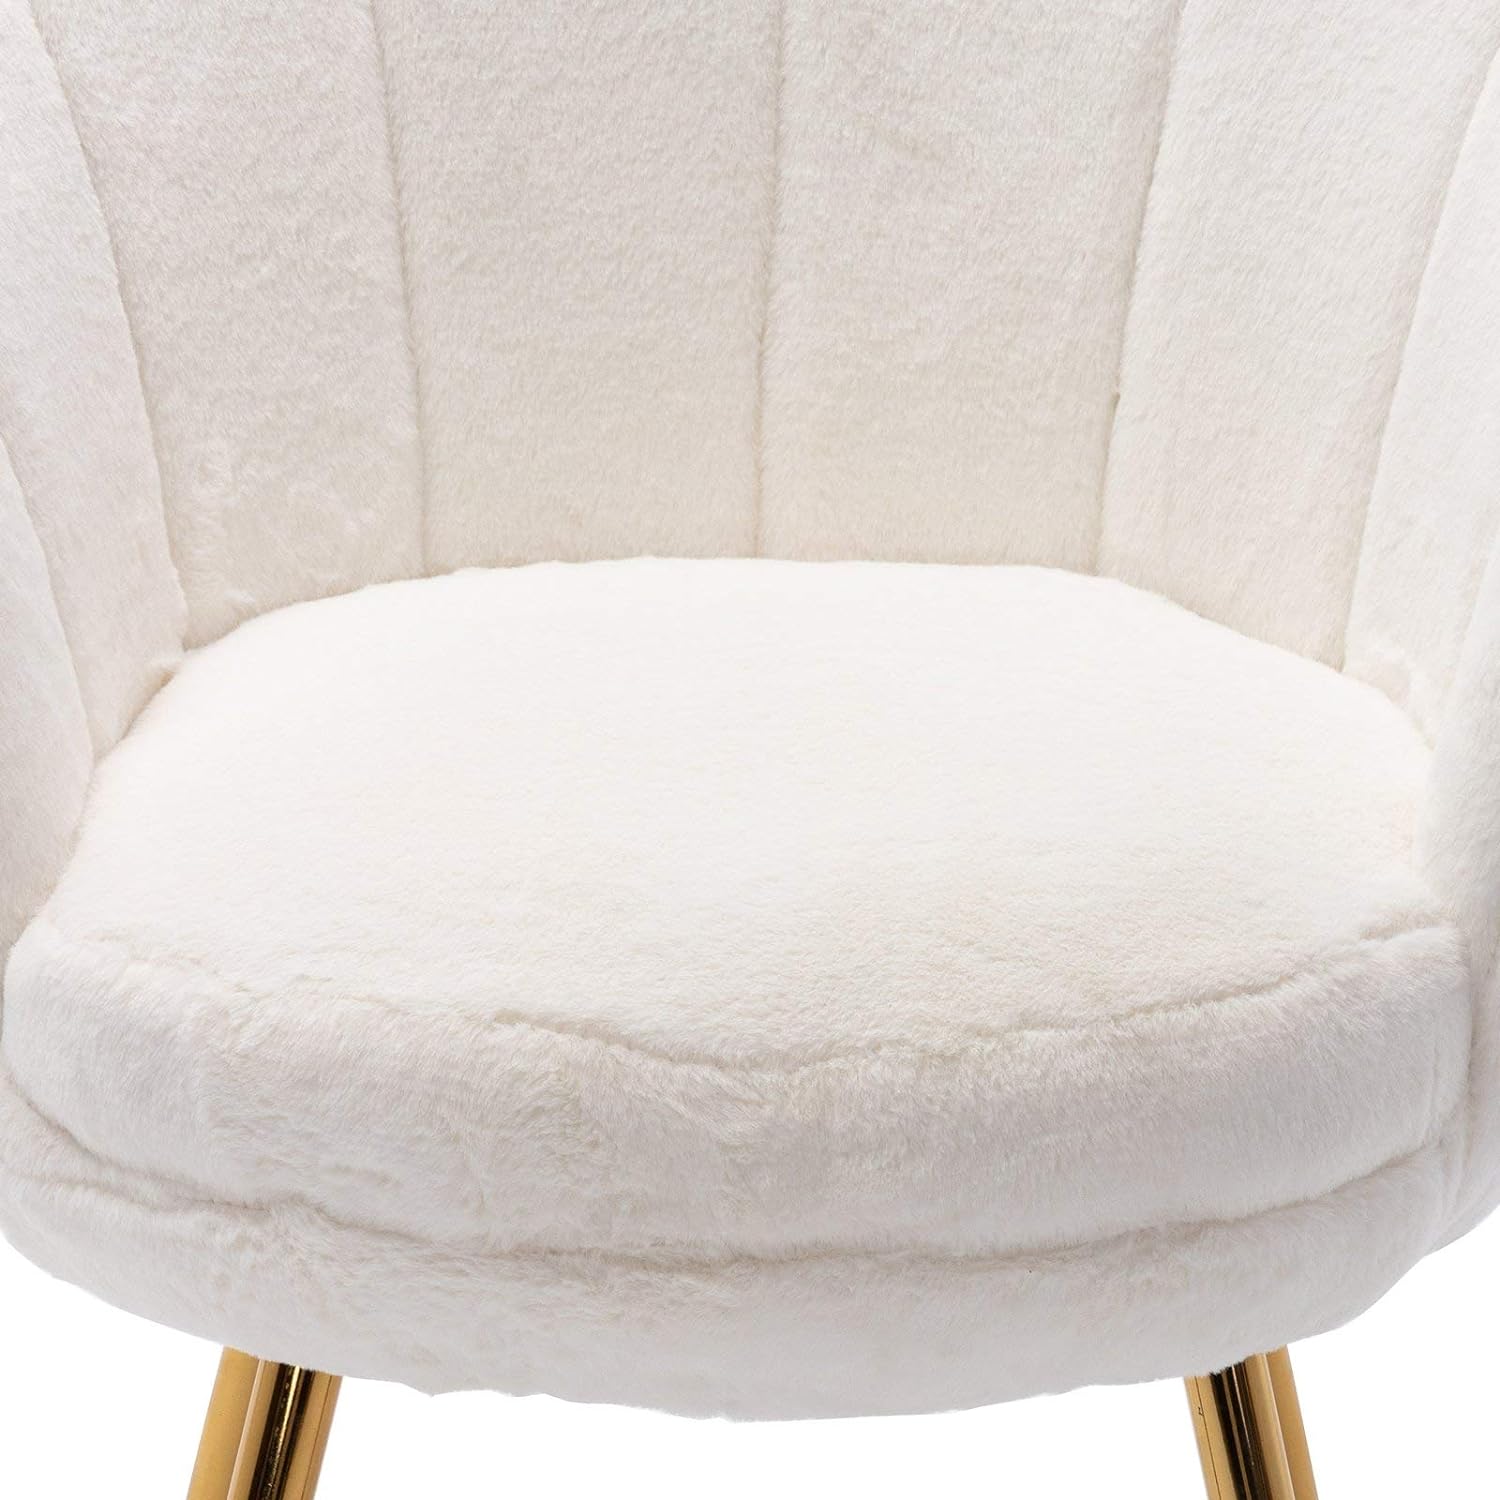 Silla tapizada de piel sintética de felpa, cómoda silla de concha marina de